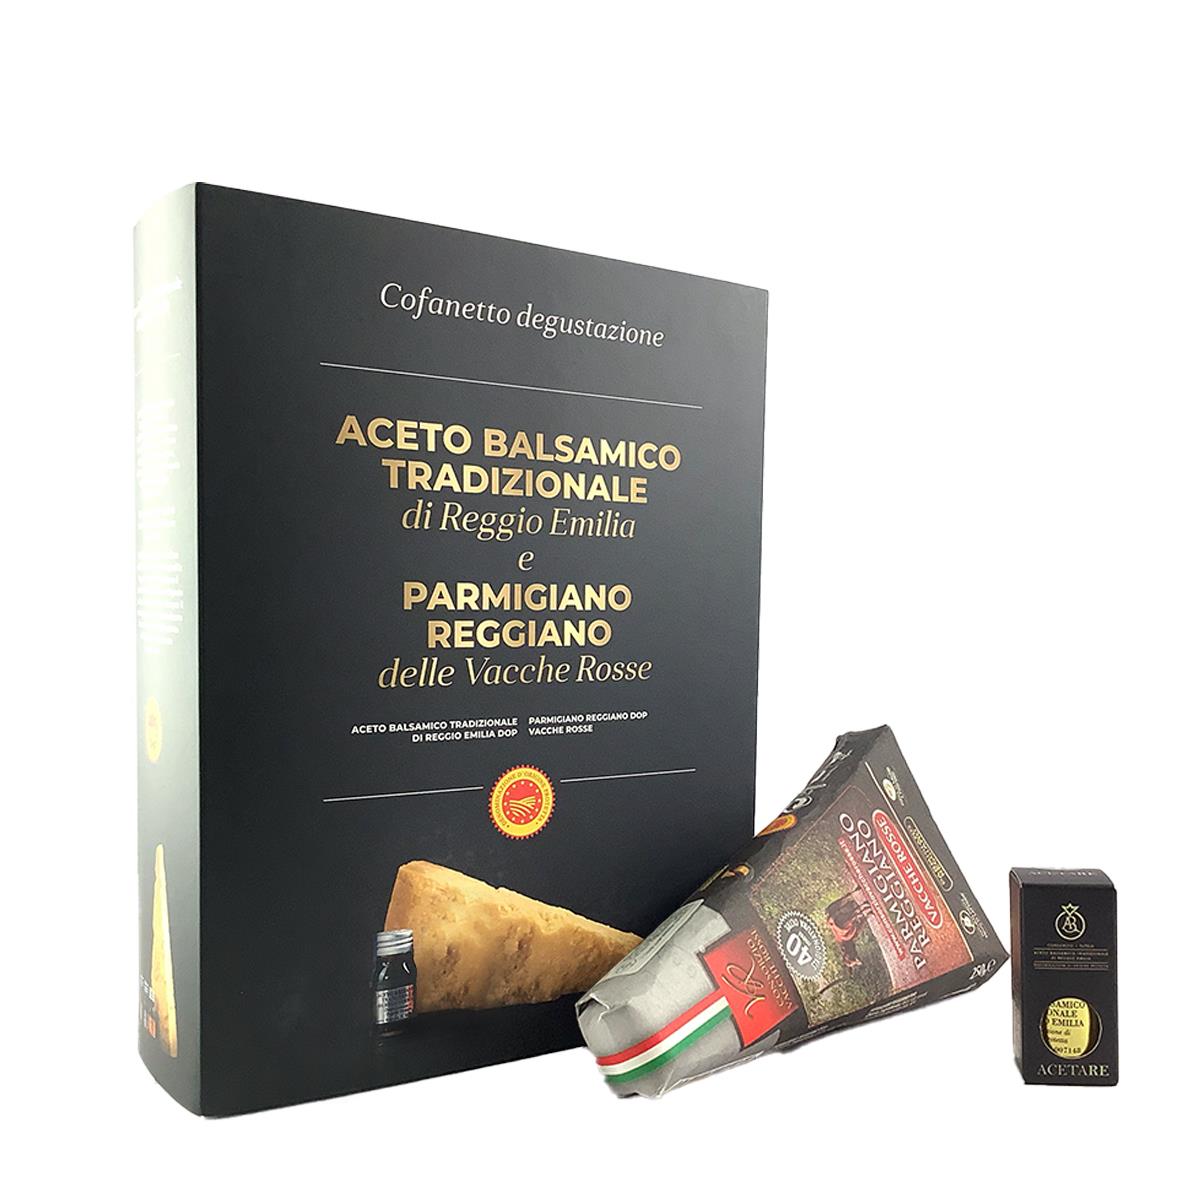 photo Box of Parmigiano Reggiano Vacche Rosse 40 Months and Reggio Emilia Gold Quality Balsamic Vinegar